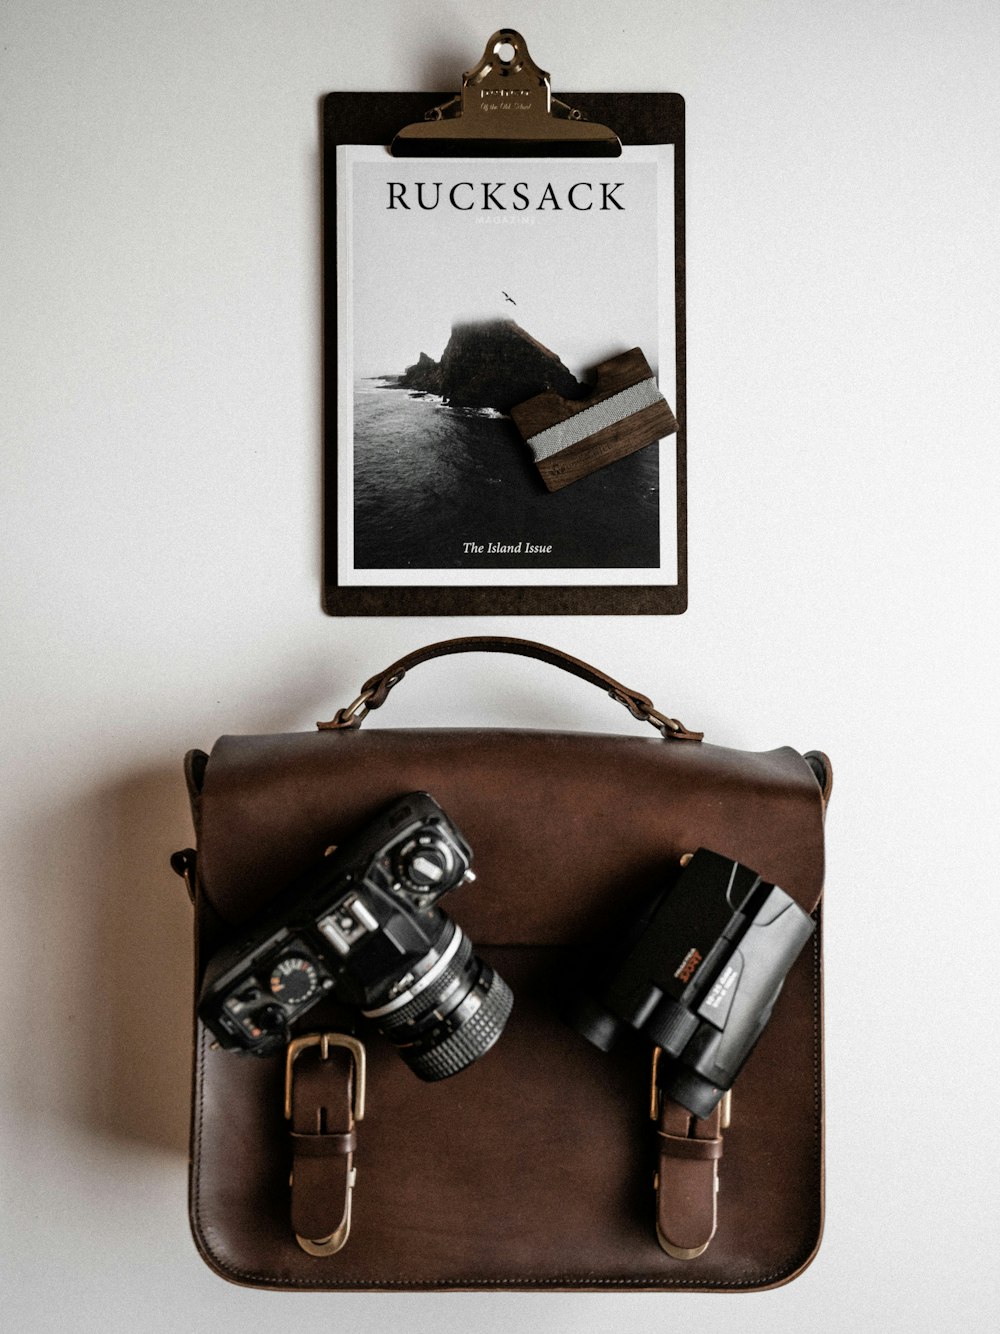 Rucksack paper board and DSLR camera on top of bag